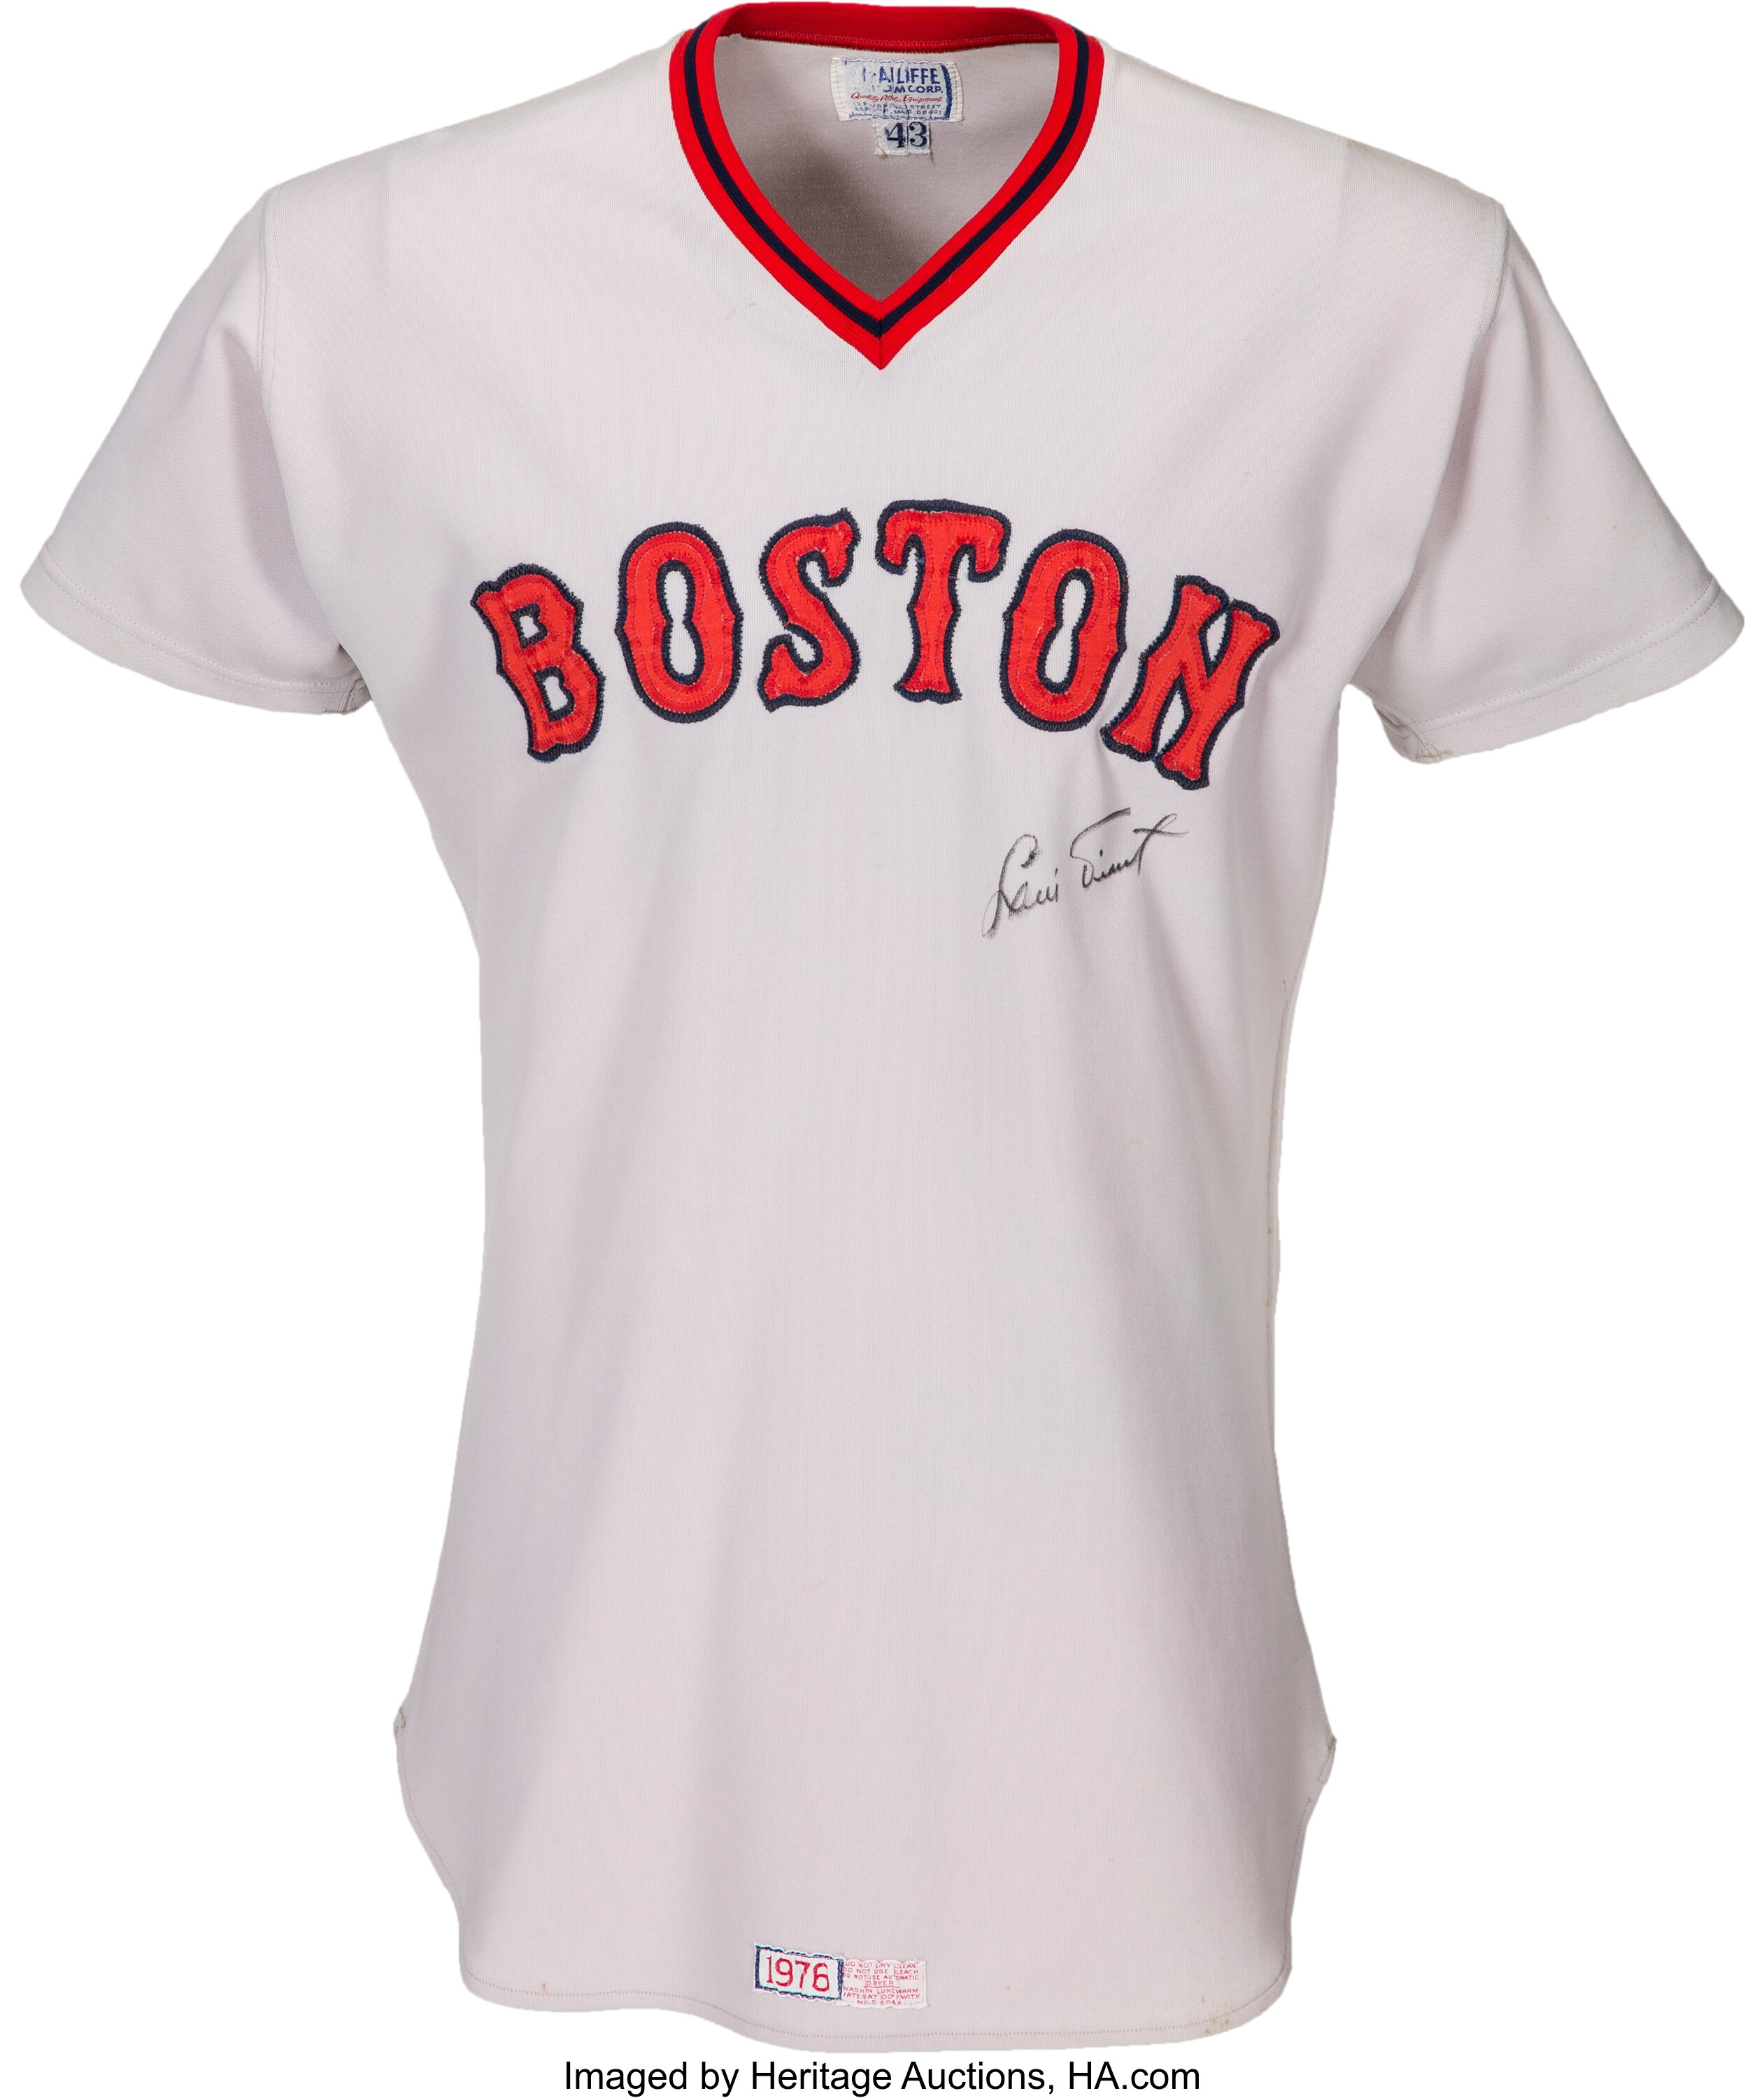 1976 Luis Tiant Game Worn Boston Red Sox Jersey. Baseball